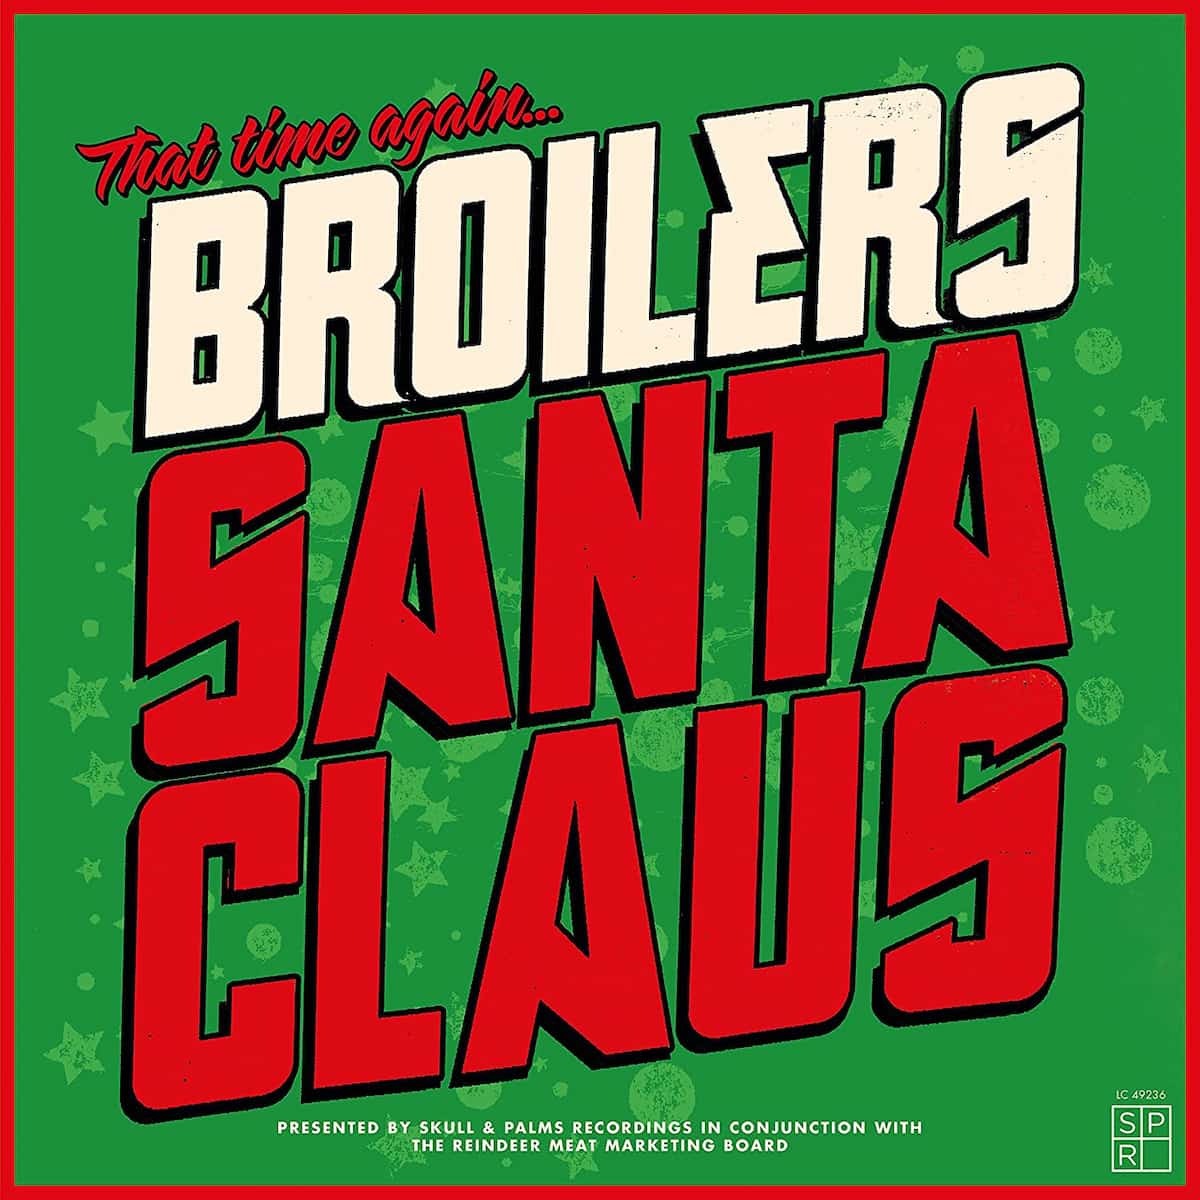 Broilers "Santa Claus" - Die etwas andere Weihnachts-CD 2021